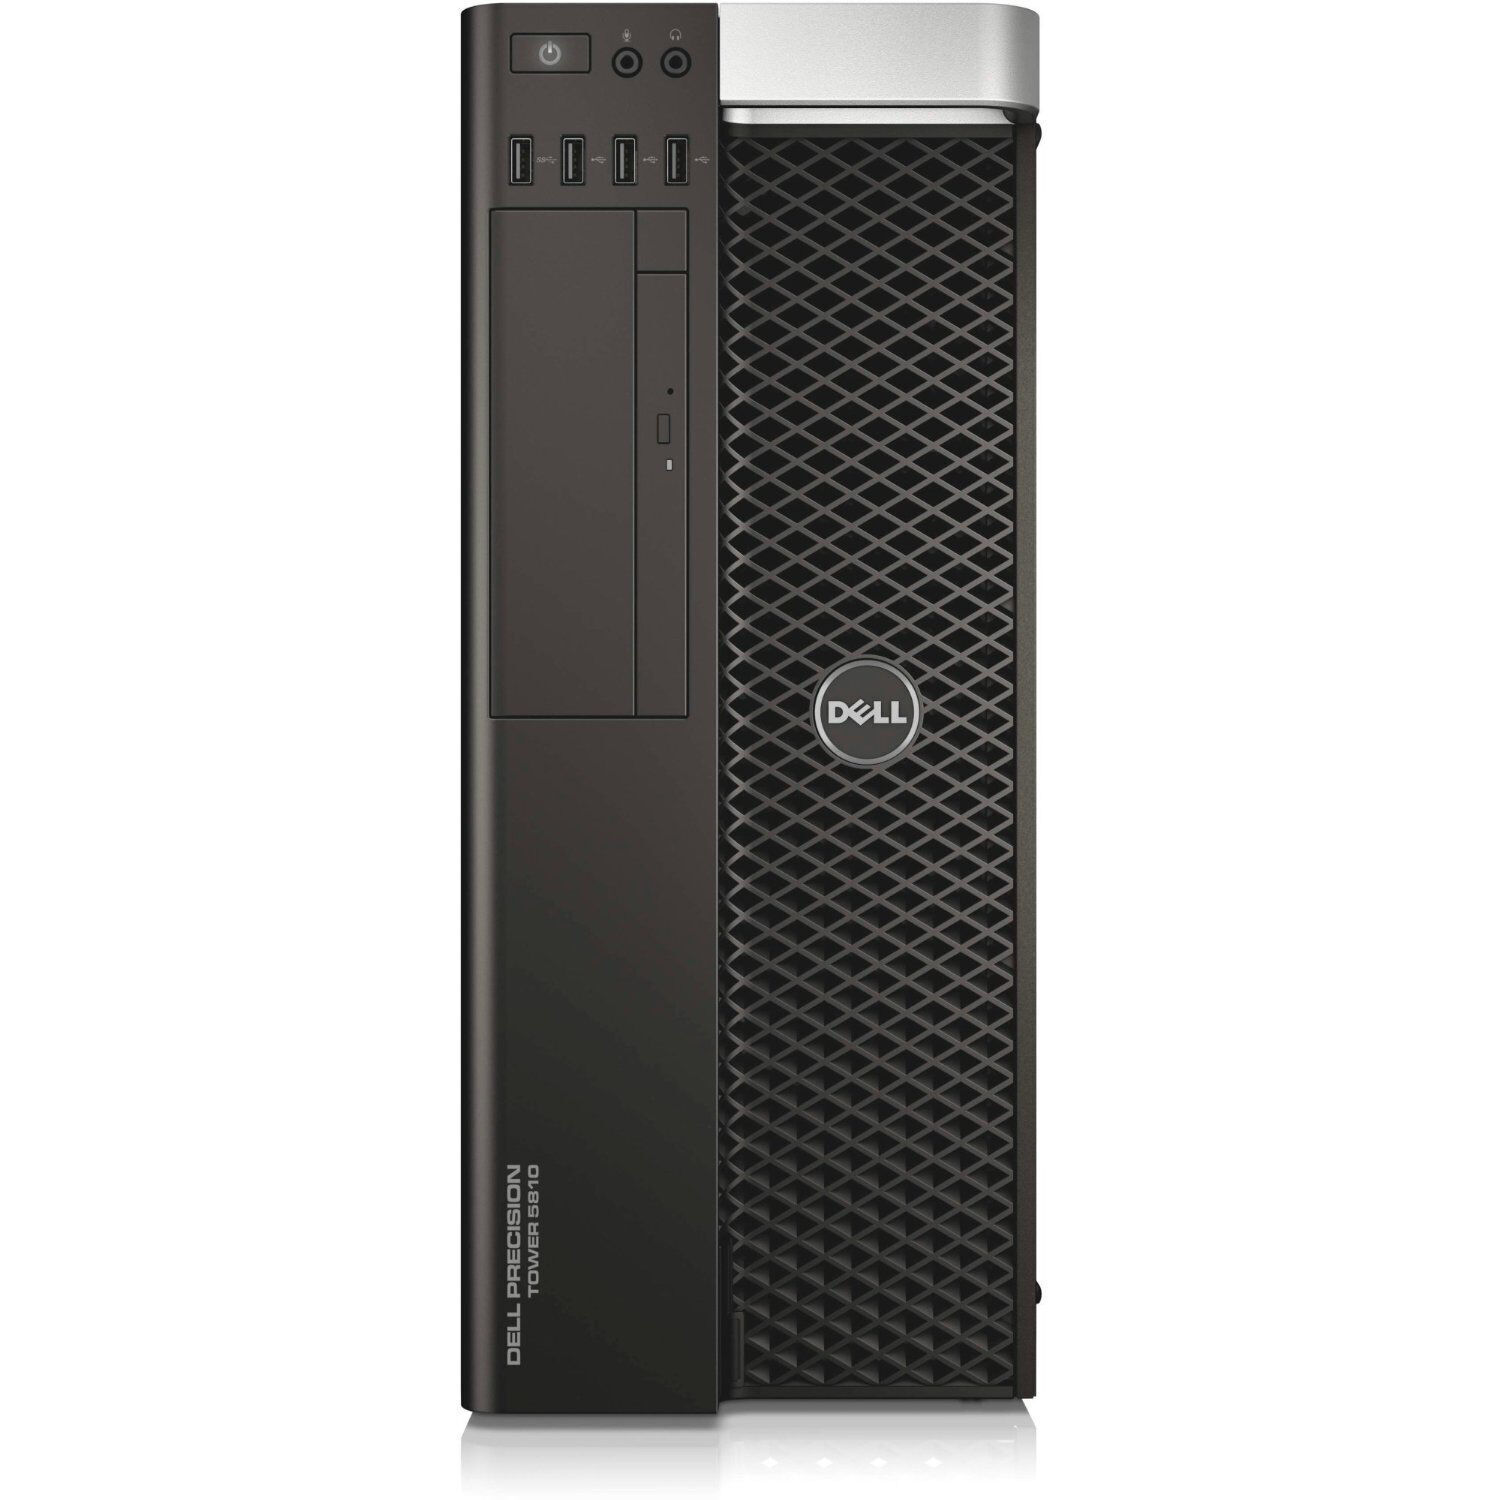 Dell Precision Tower 5810 Intel XEON 3.50 GHz 16 GB 500 GB SSD Windows 10 Pro